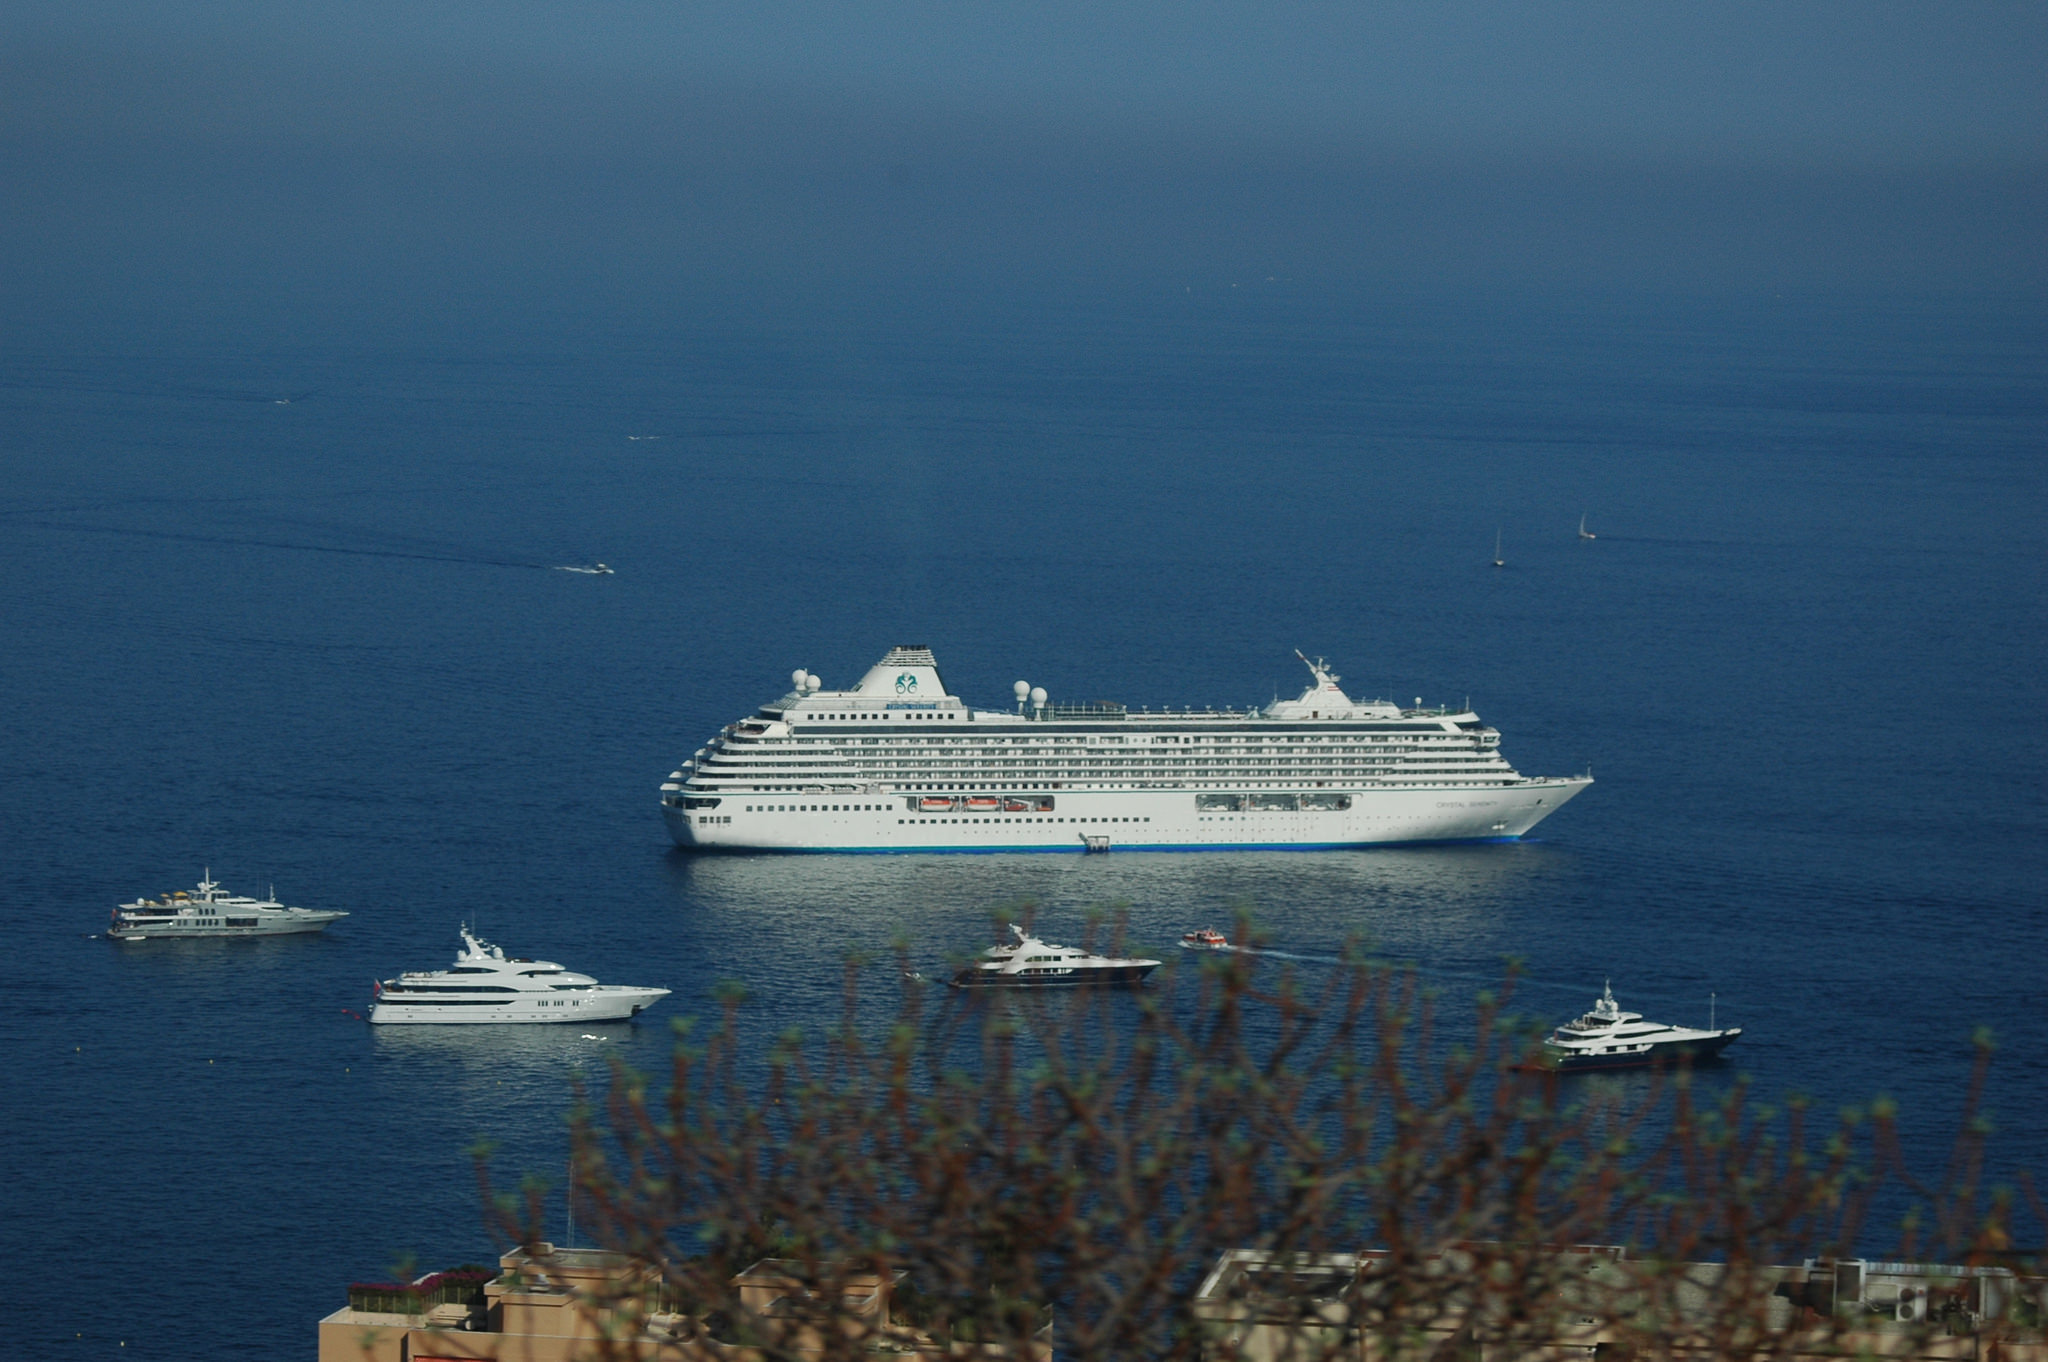 Diary of a Europe cruise virgin: Day 2 at sea on MSC Splendida